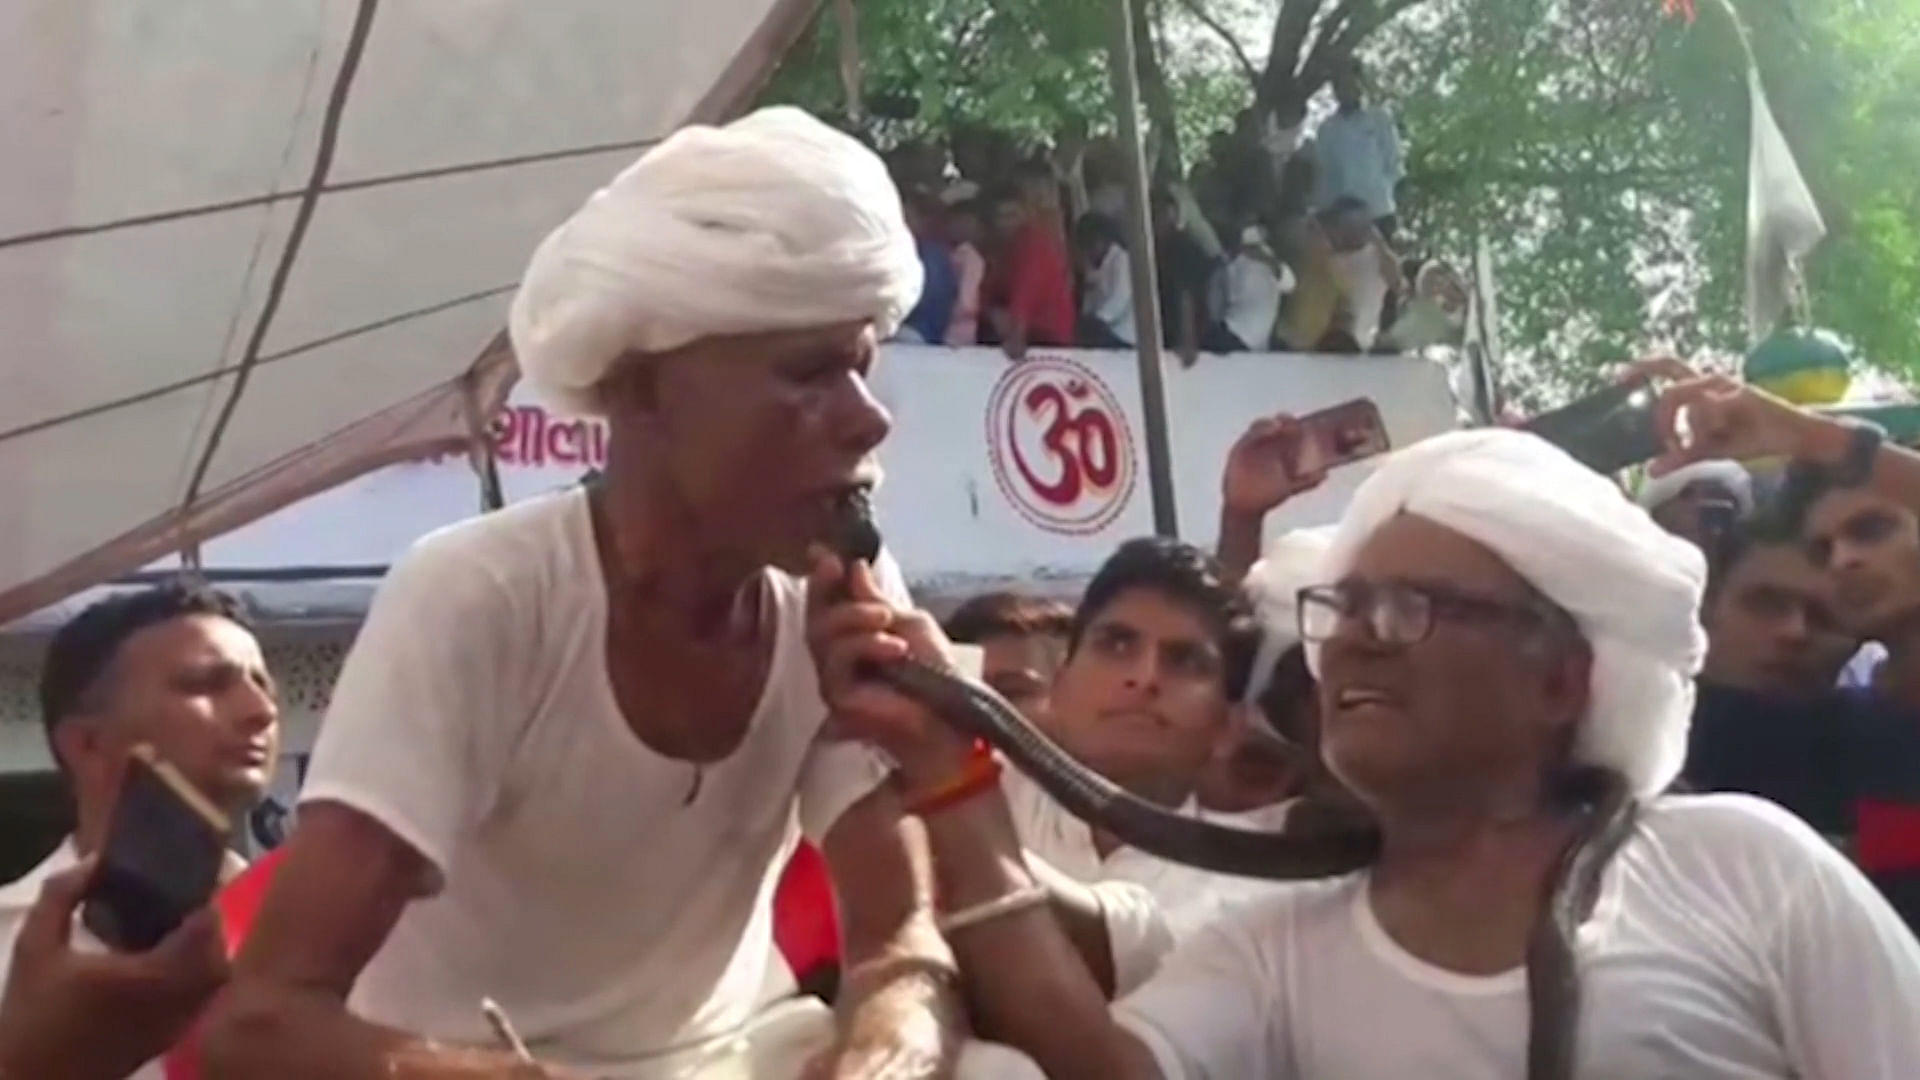 Cobra bites a devotee as part of ritual in a local festival